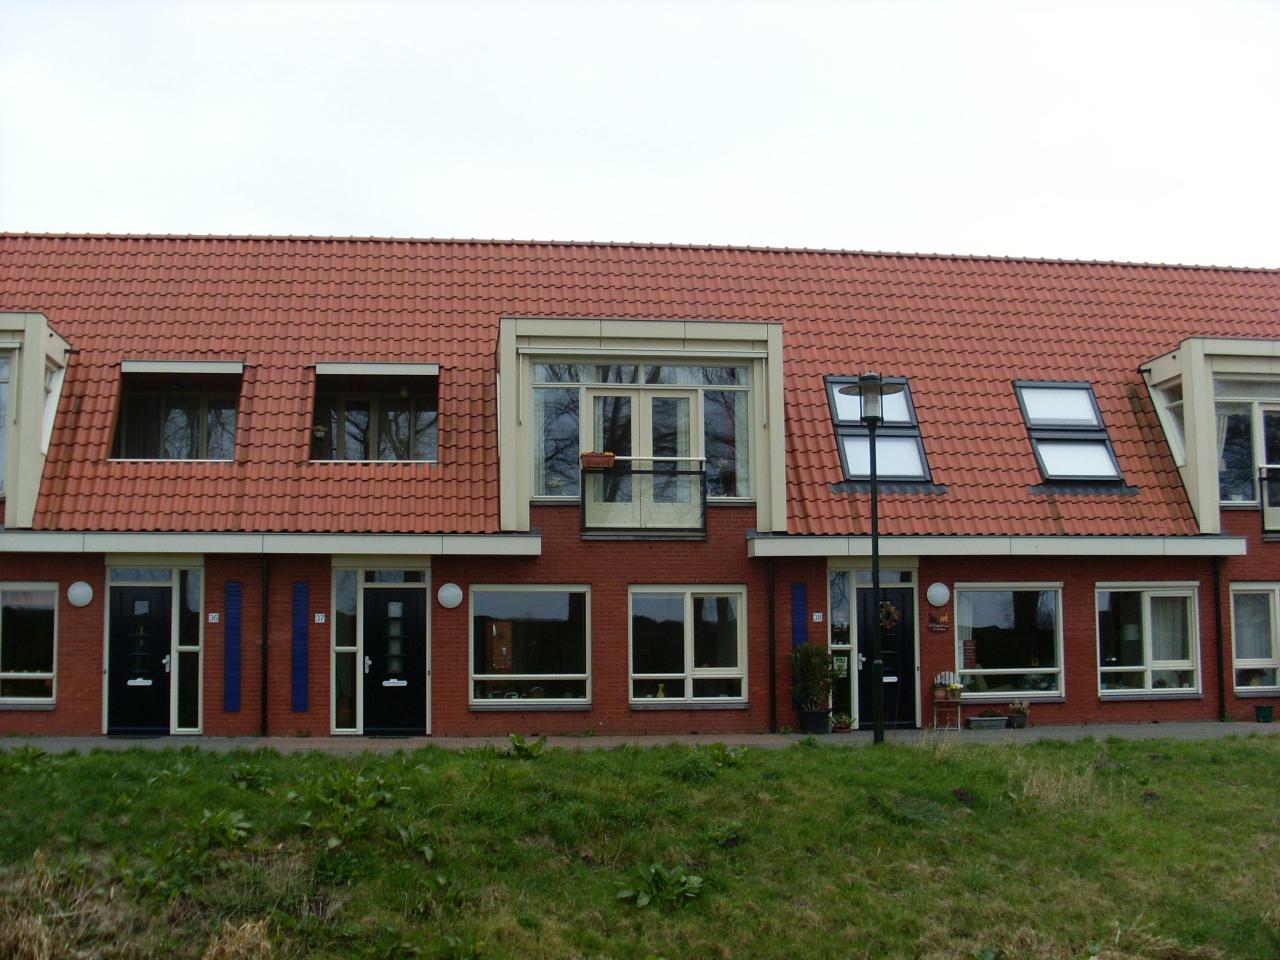 Nanne Sluisstraat 38, 1601 SC Enkhuizen, Nederland